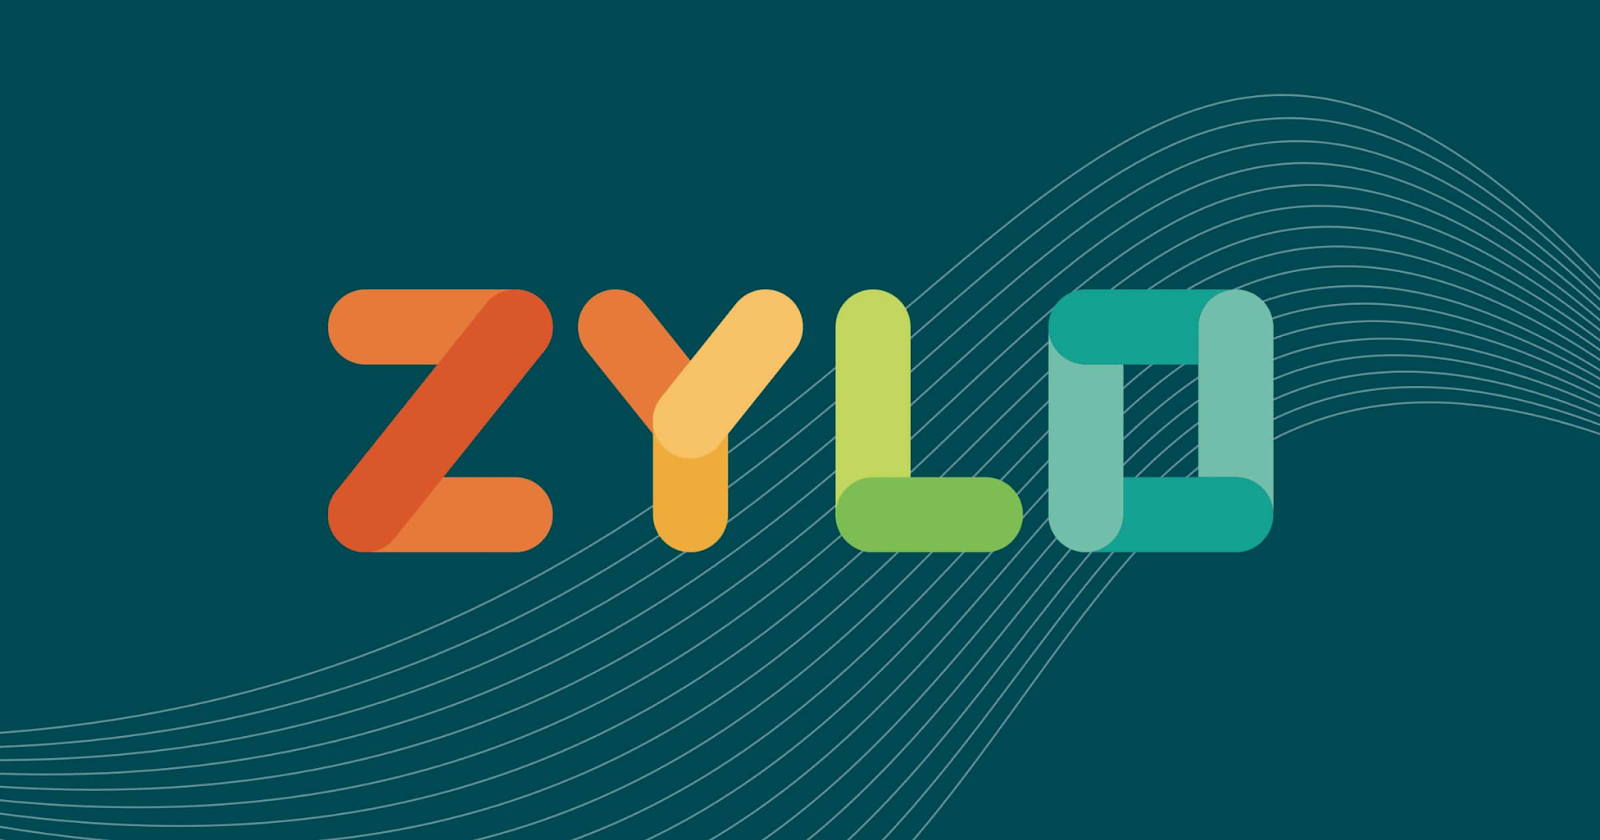 The Zylo logo.